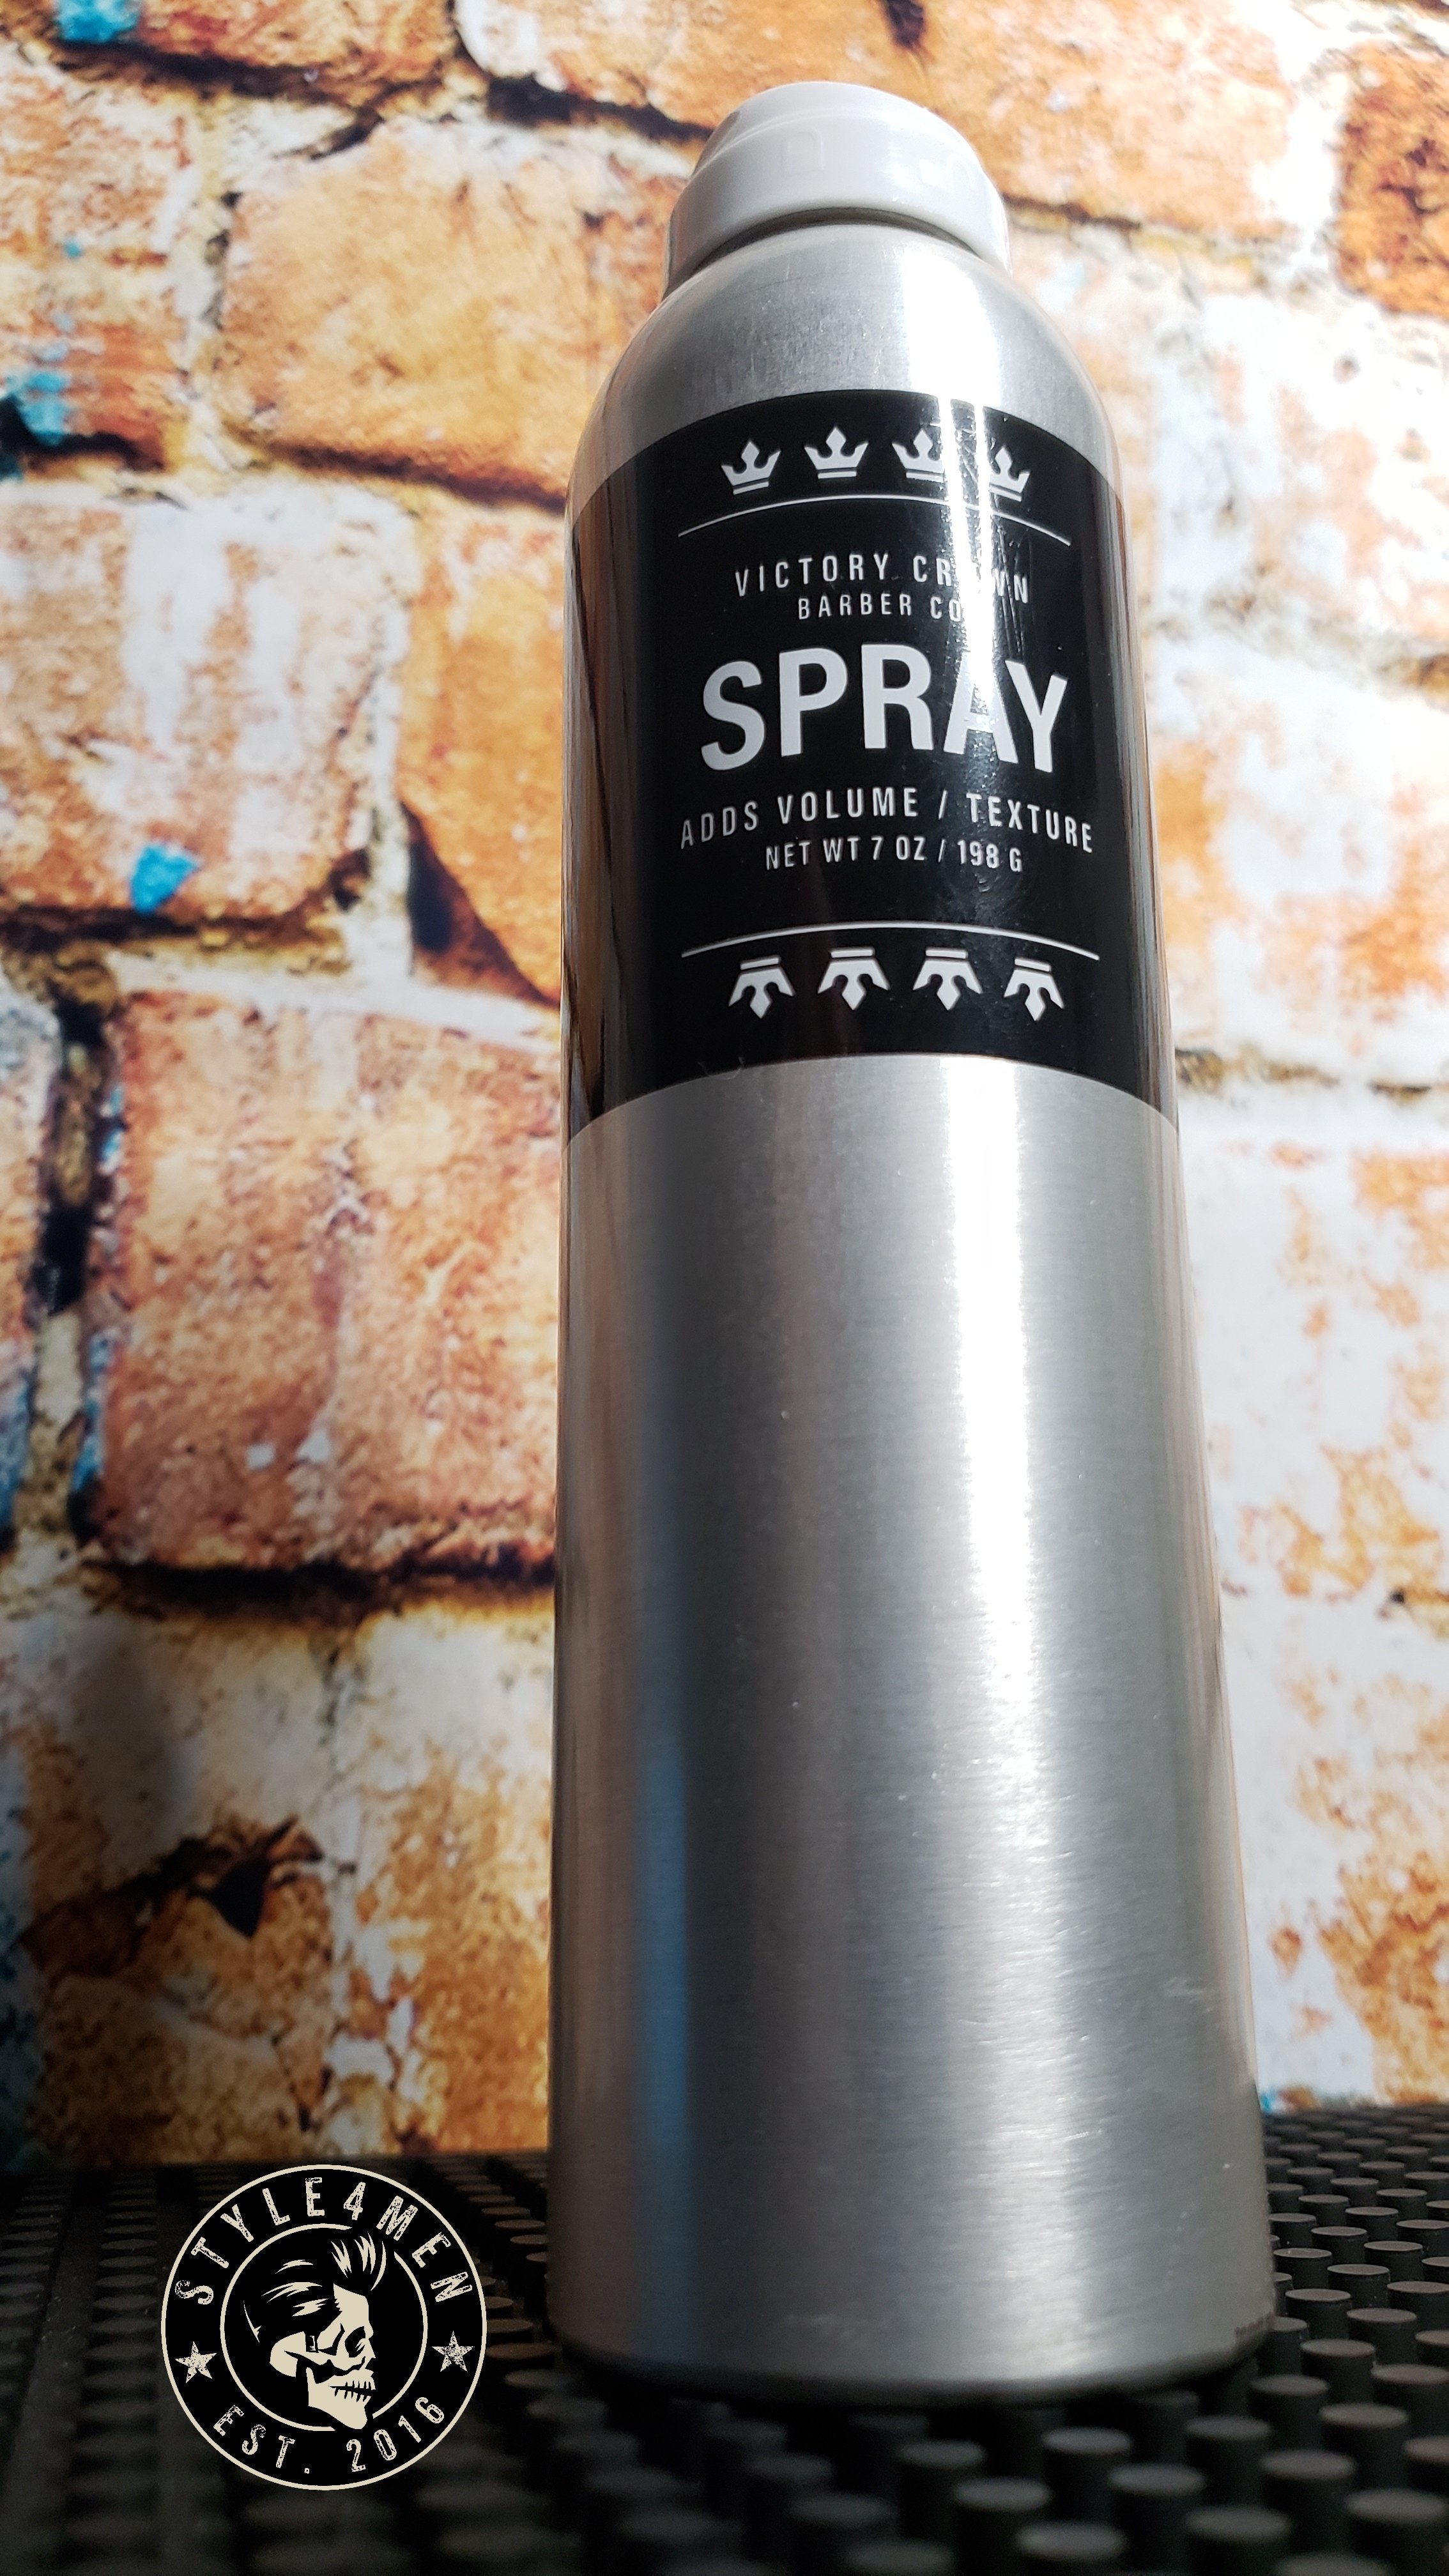 SPRAY by Victory Crown – Dry Shampoo or Salt Spray? Or something new?